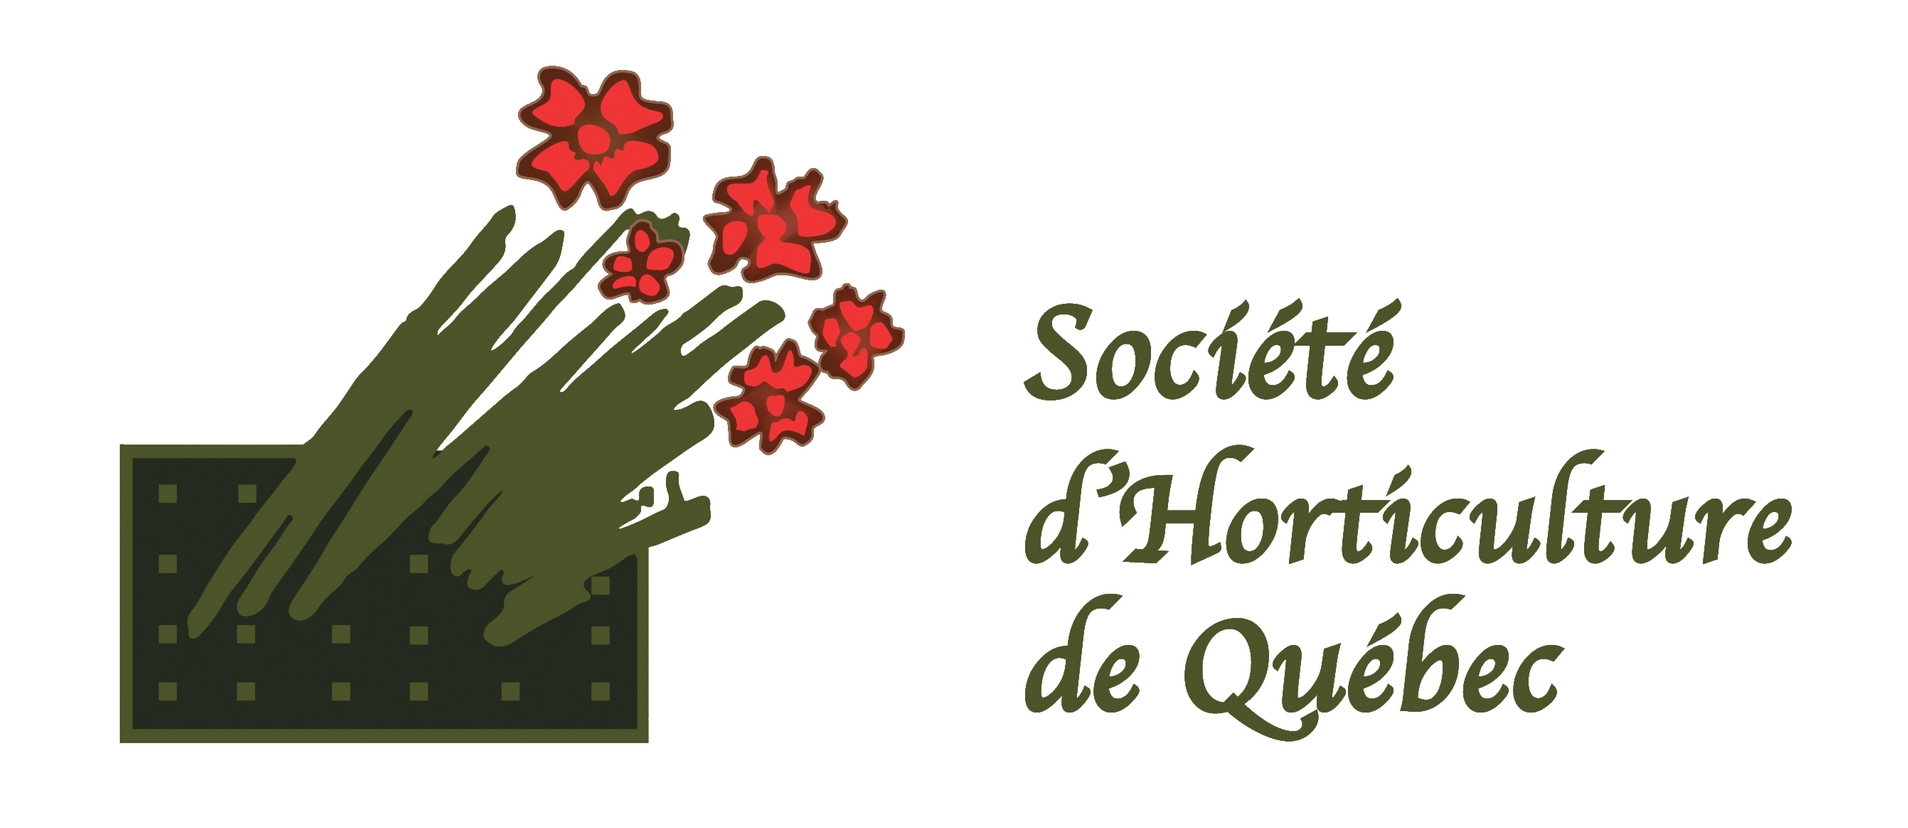 Société d'horticulture de Québec 